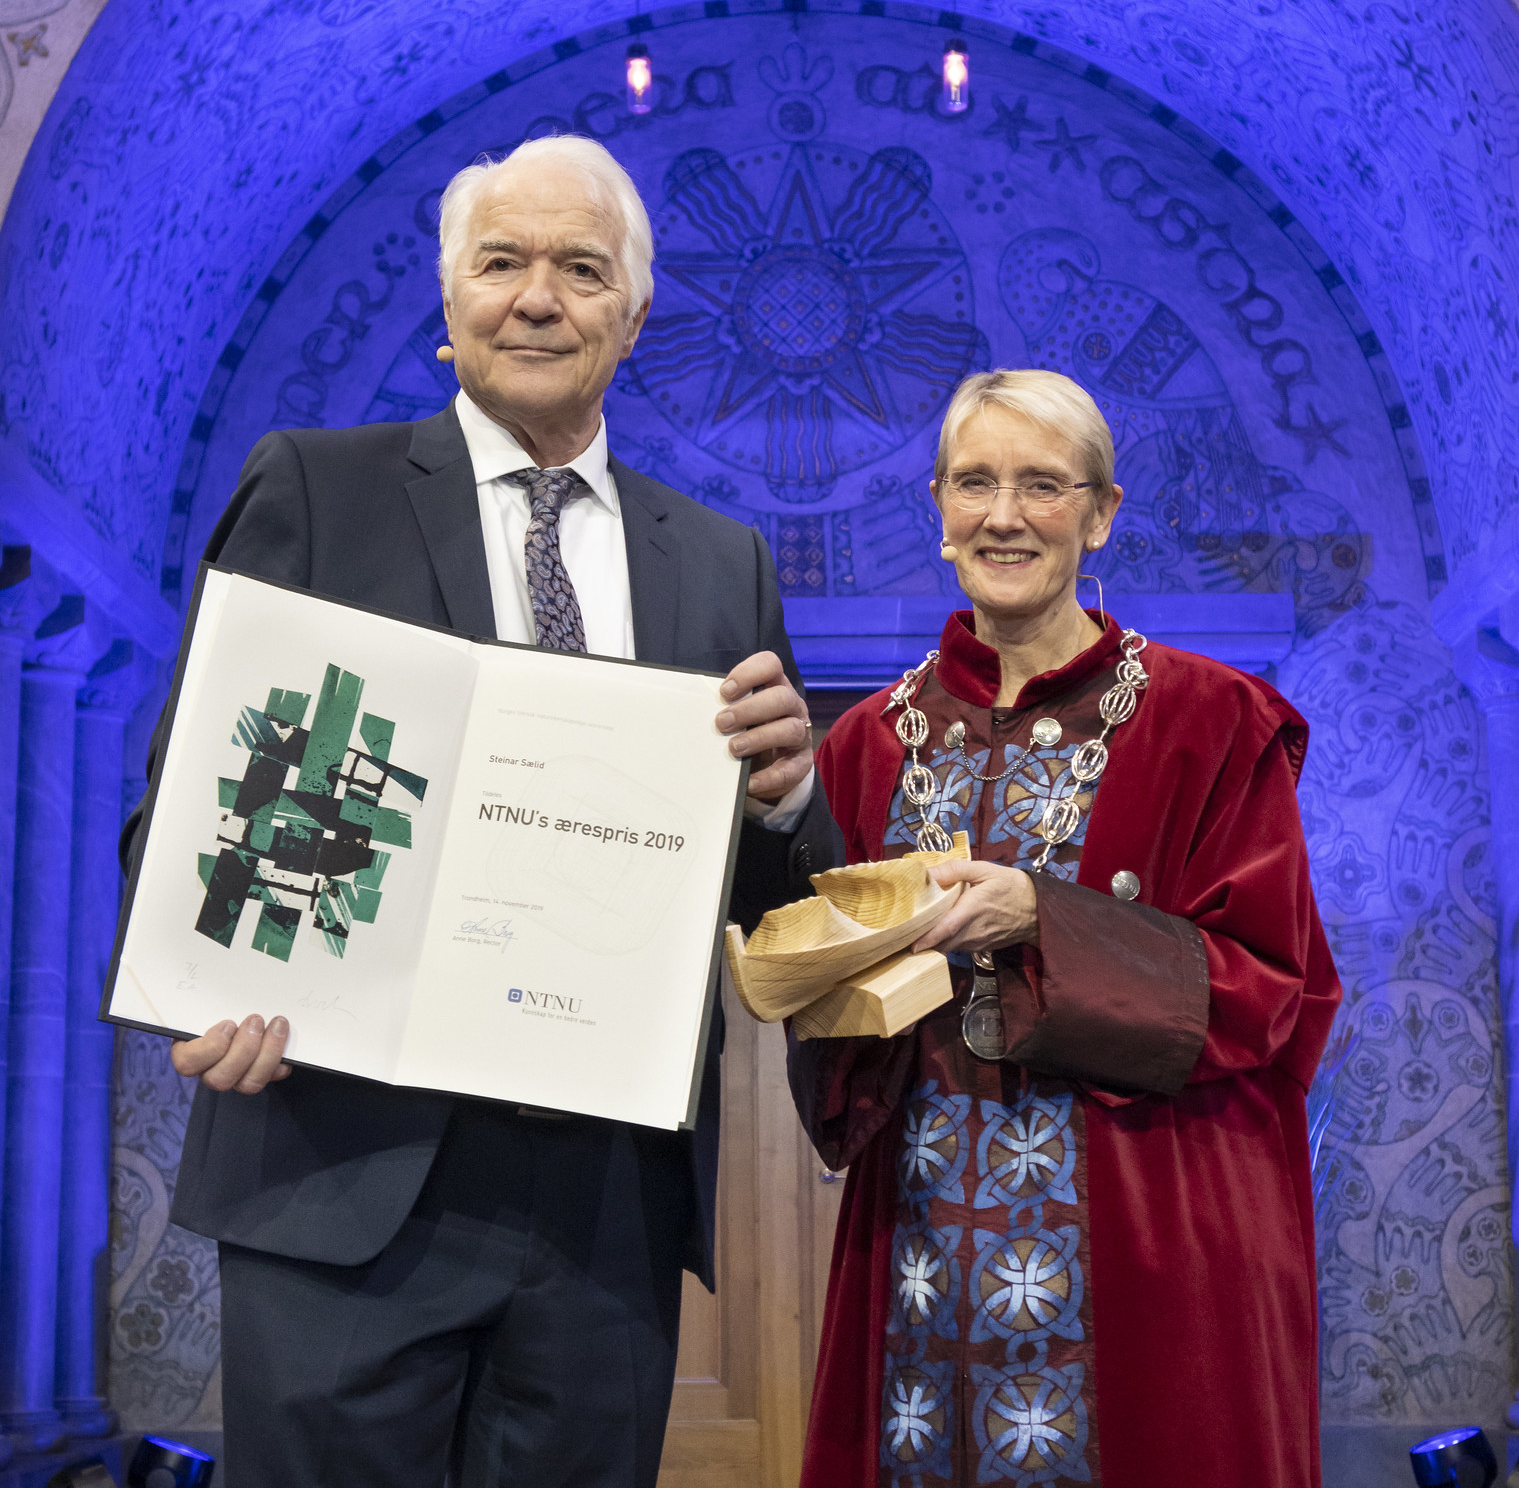 Konstituert rektor Anne Borg og æresprisvinner Steinar Sælid. Foto: Thor Nielsen/NTNU.